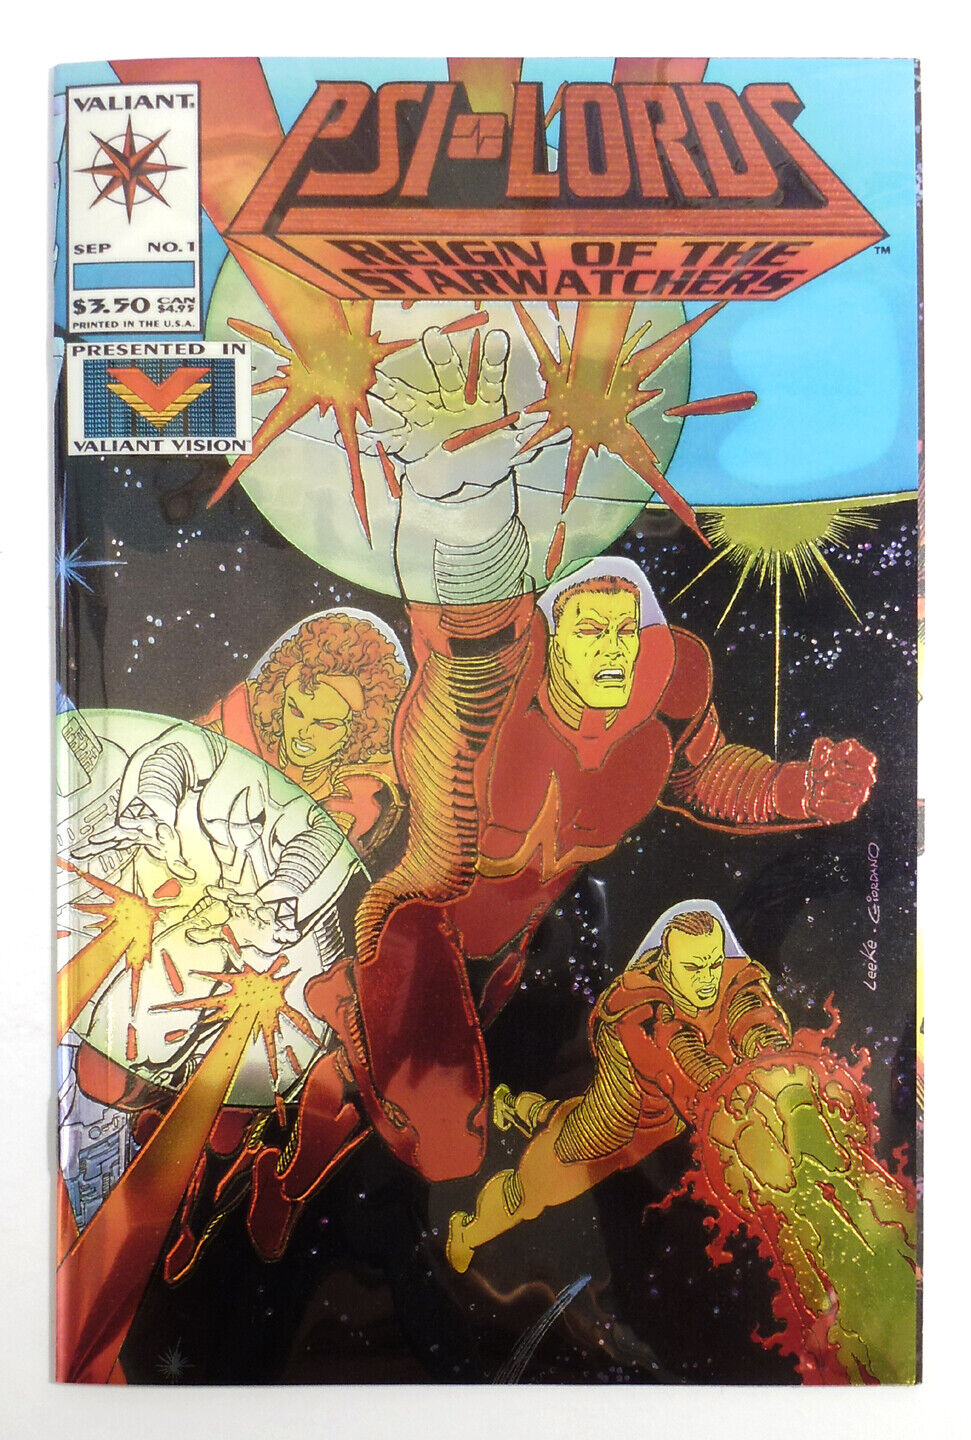 PSI-LORDS #1 Chromium CVR Reign of the Starwatchers (1994) Valiant Comics